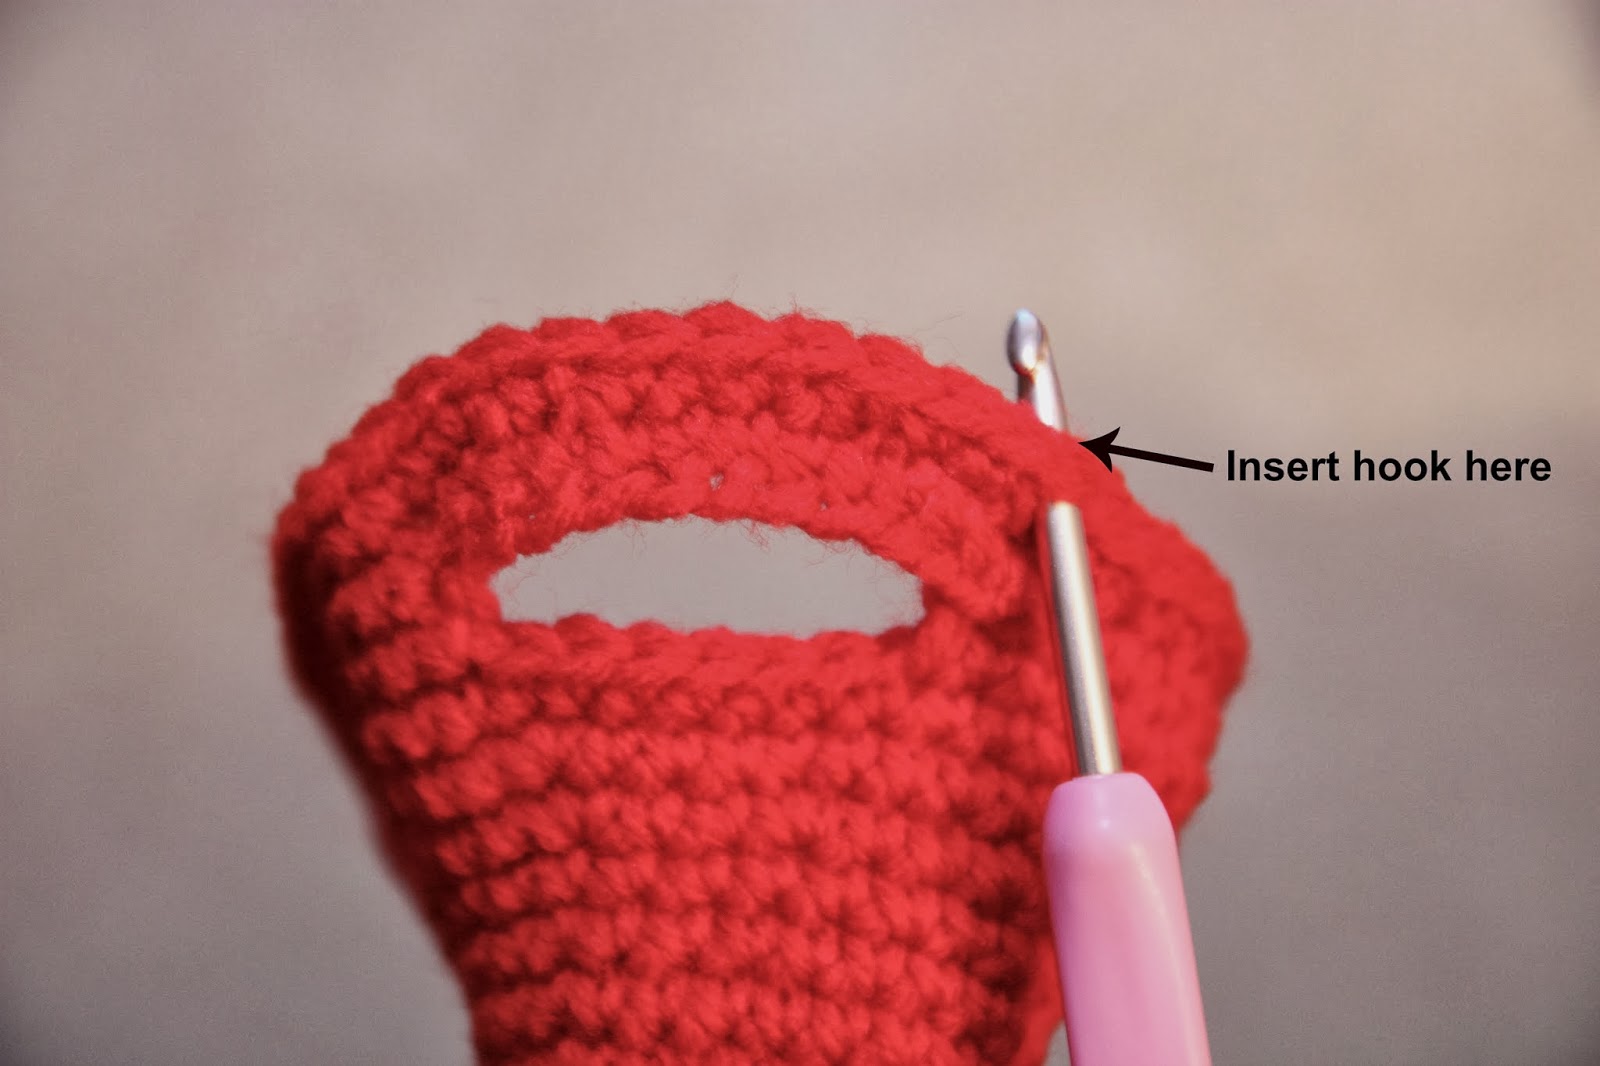 A[mi]dorable Crochet: Dog Hat Pattern!